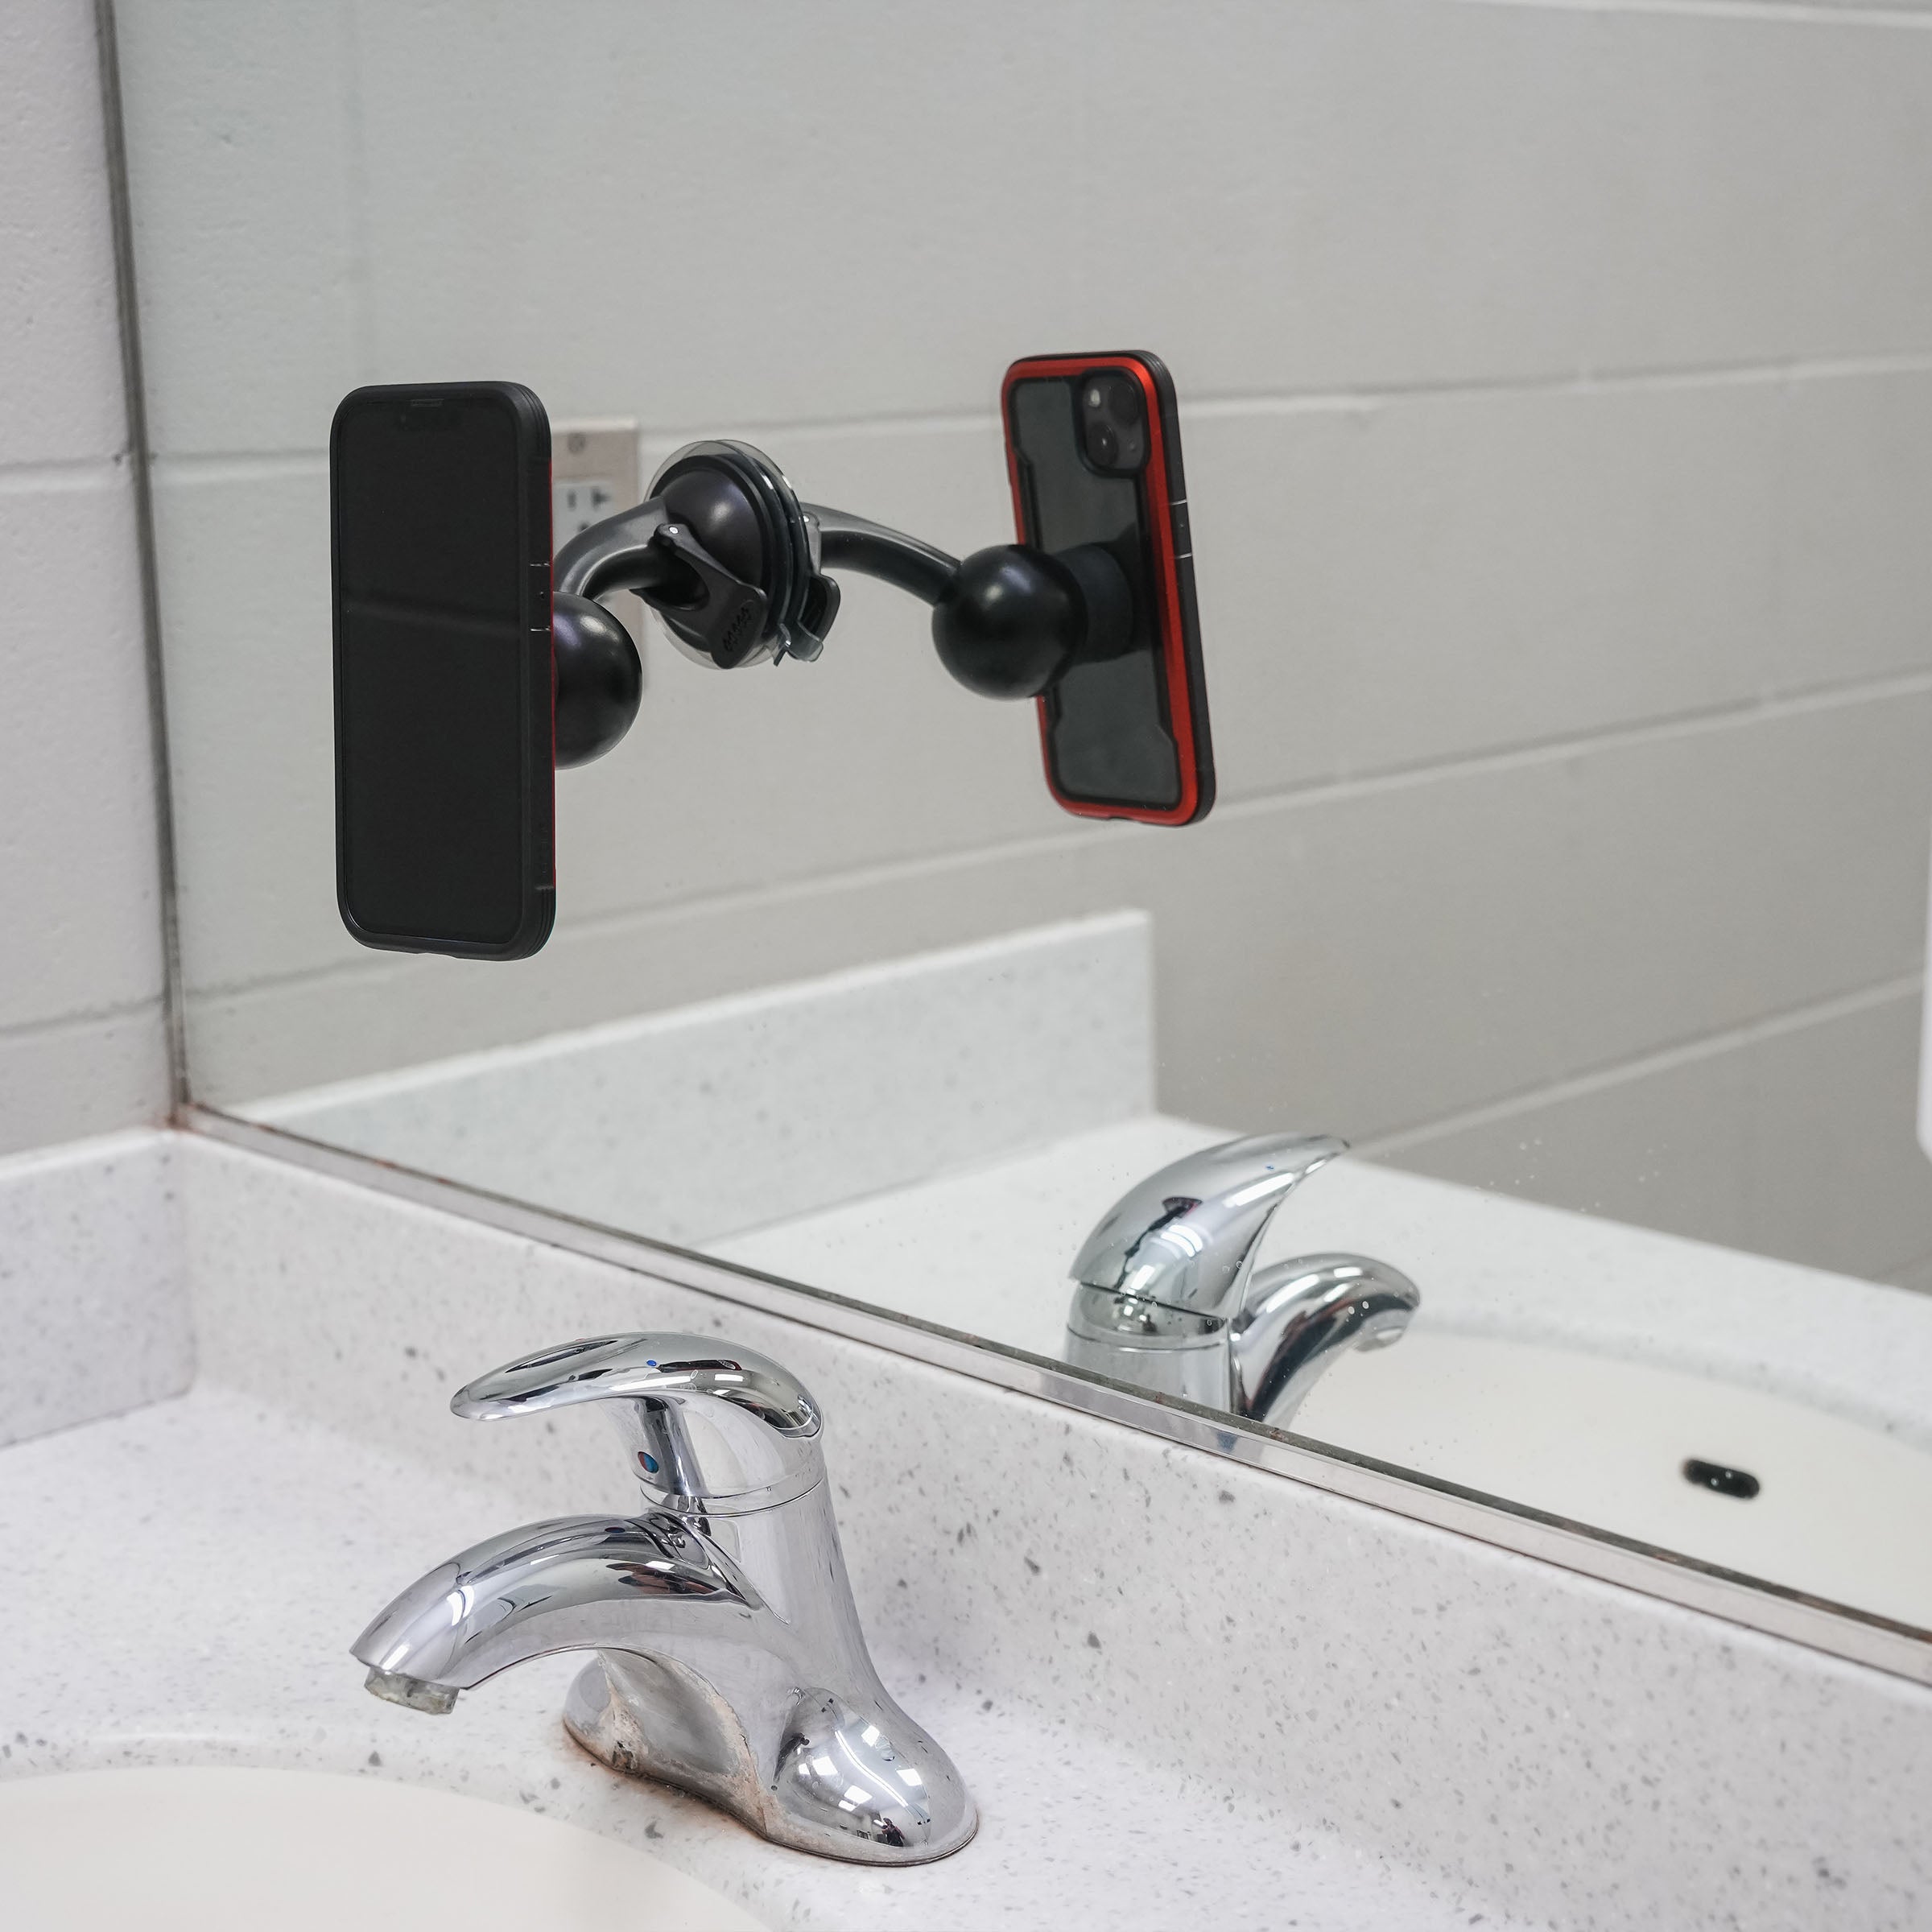 iOtraveler Suction Magnetic Phone Mount shown mounted to mirror(mounted to mirror)